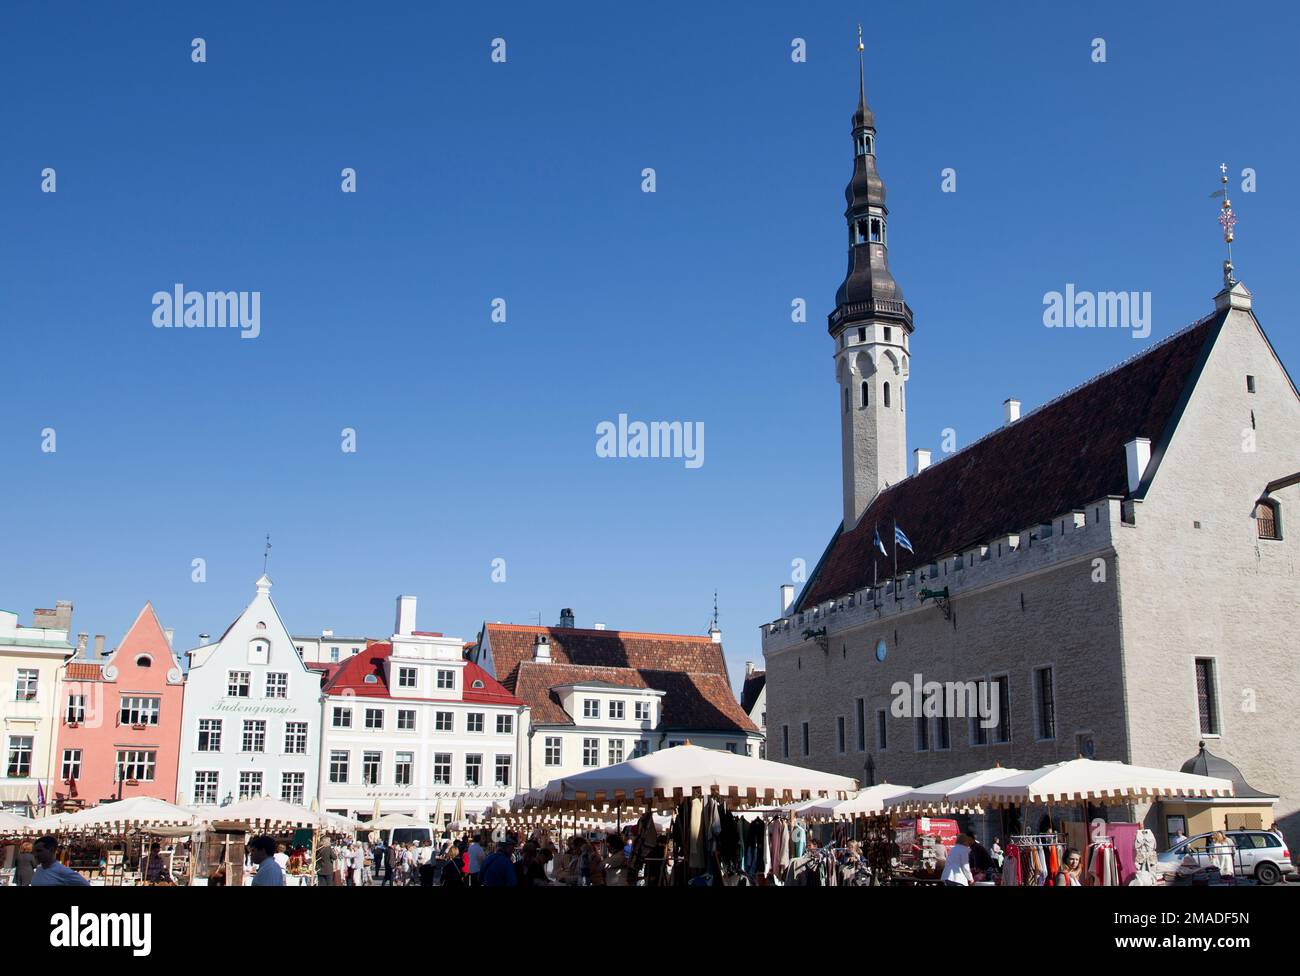 Estonia, Tallinn, town hall and market in market square. Stock Photo